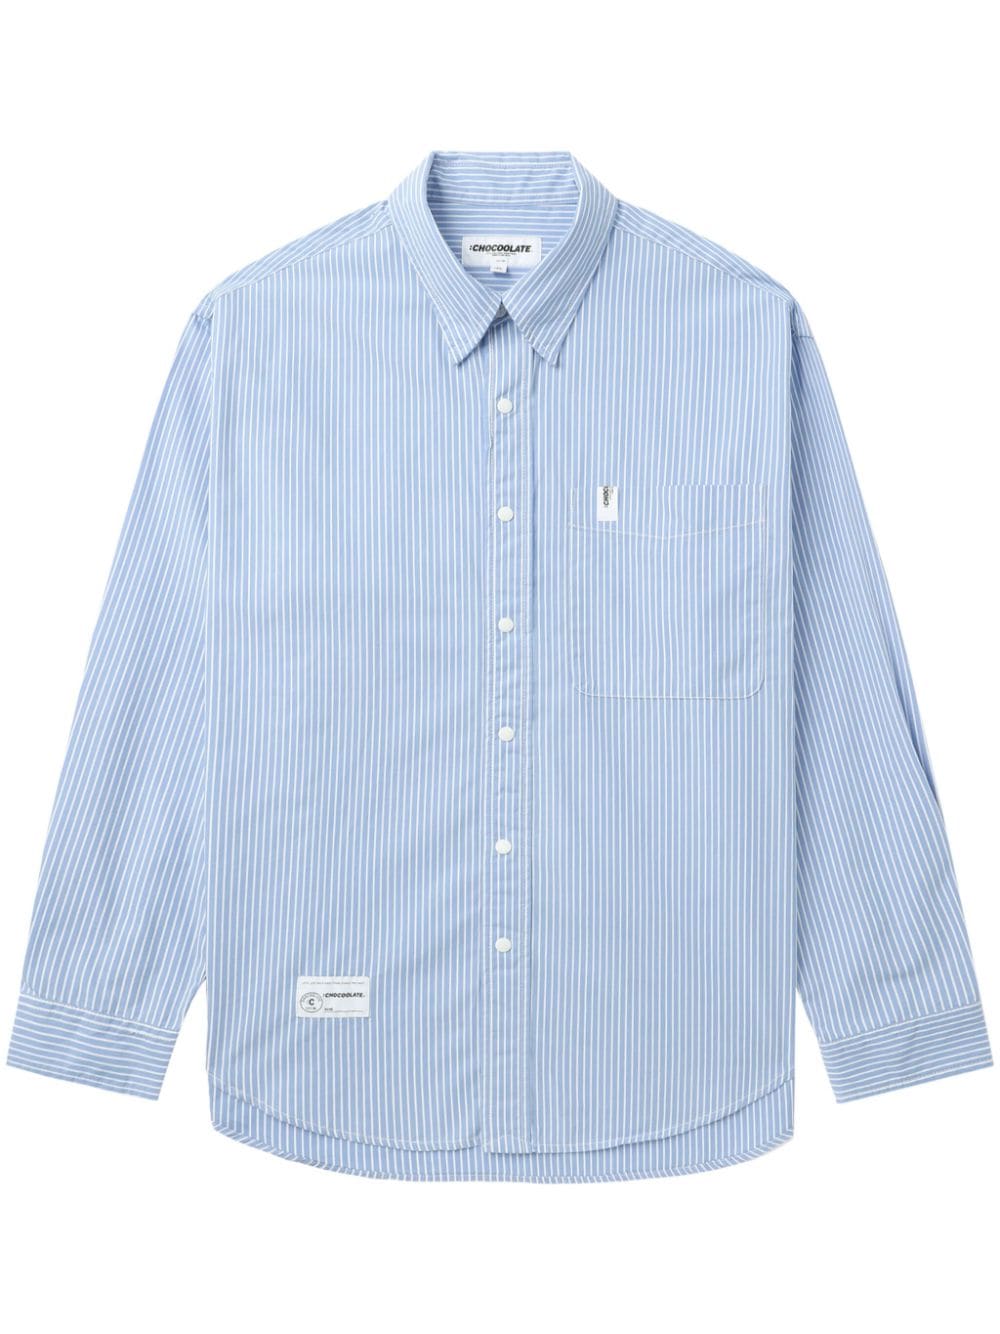 Chocoolate Striped Cotton Shirt In Blue